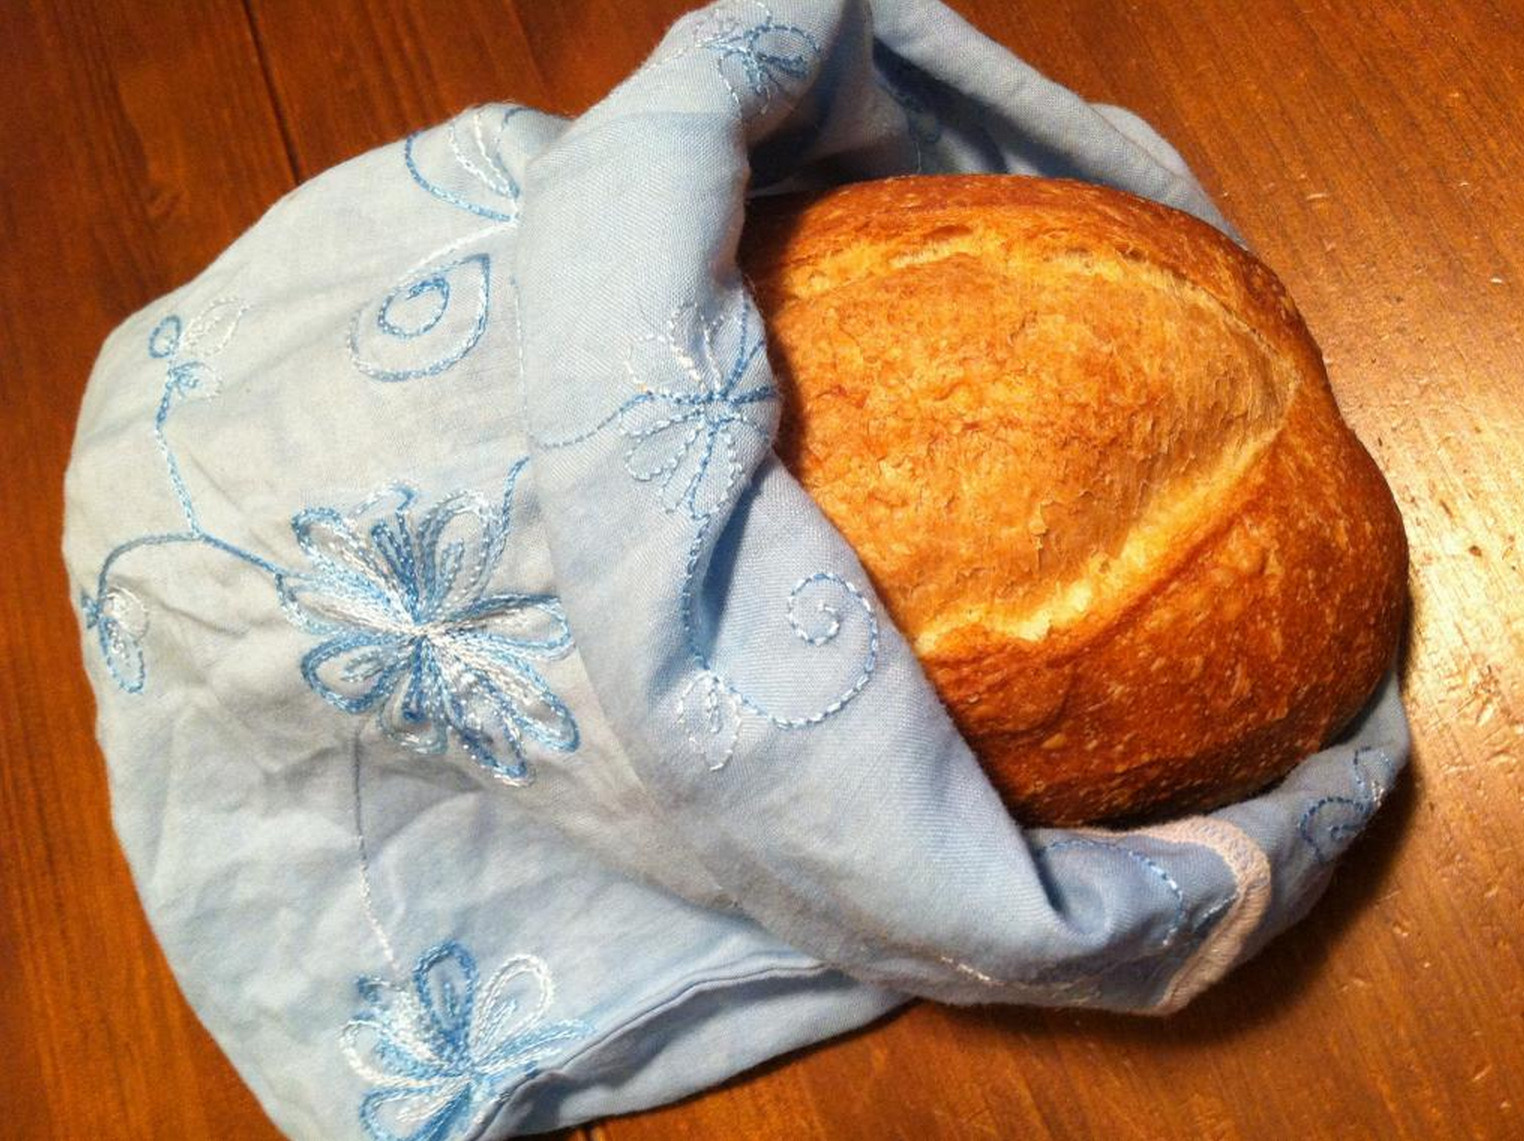 bread in a bag